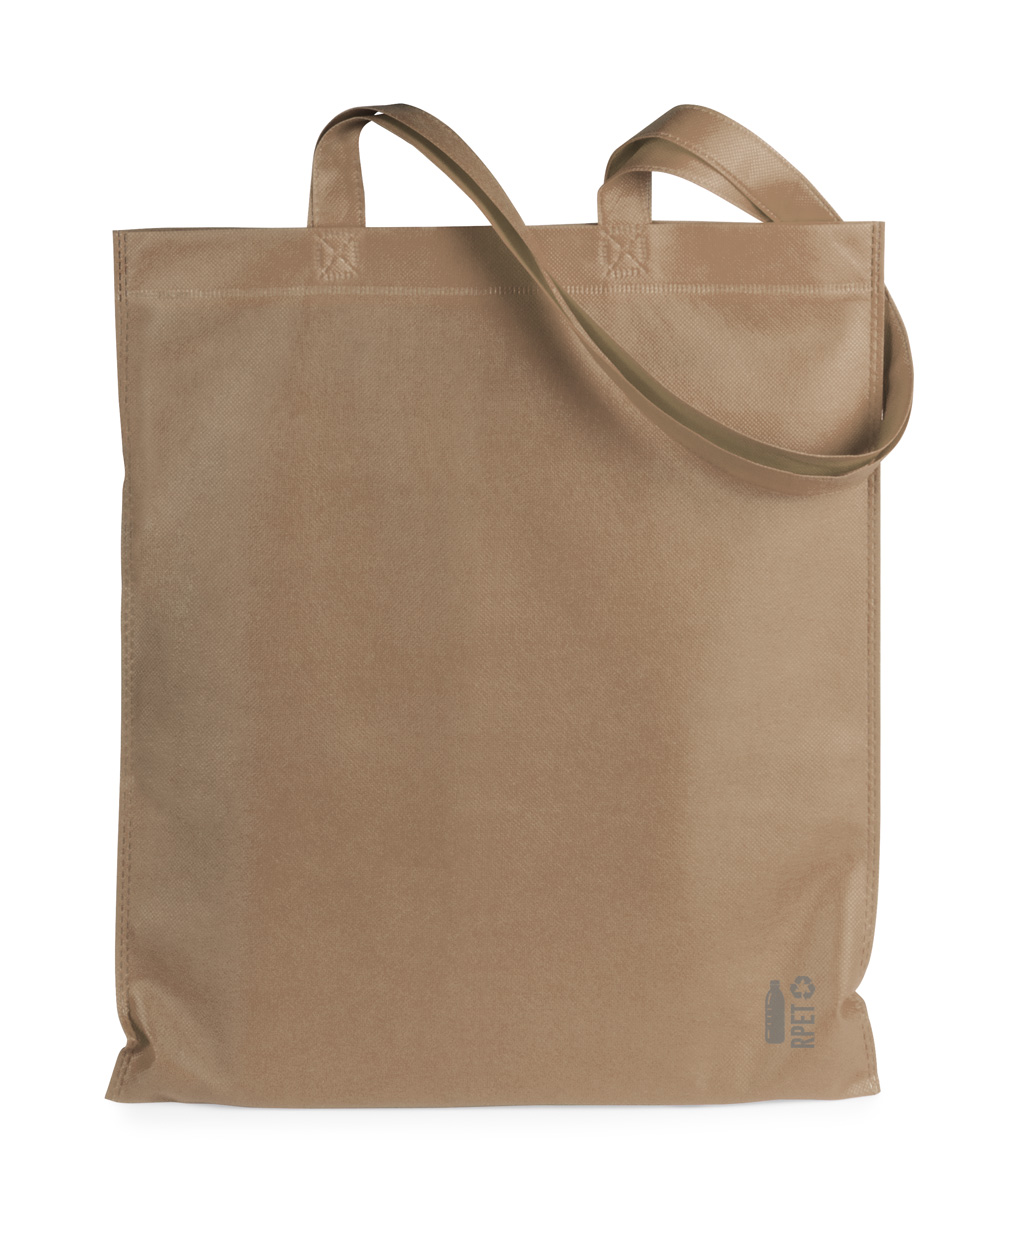 Shopping bag MARIEK made of RPET material